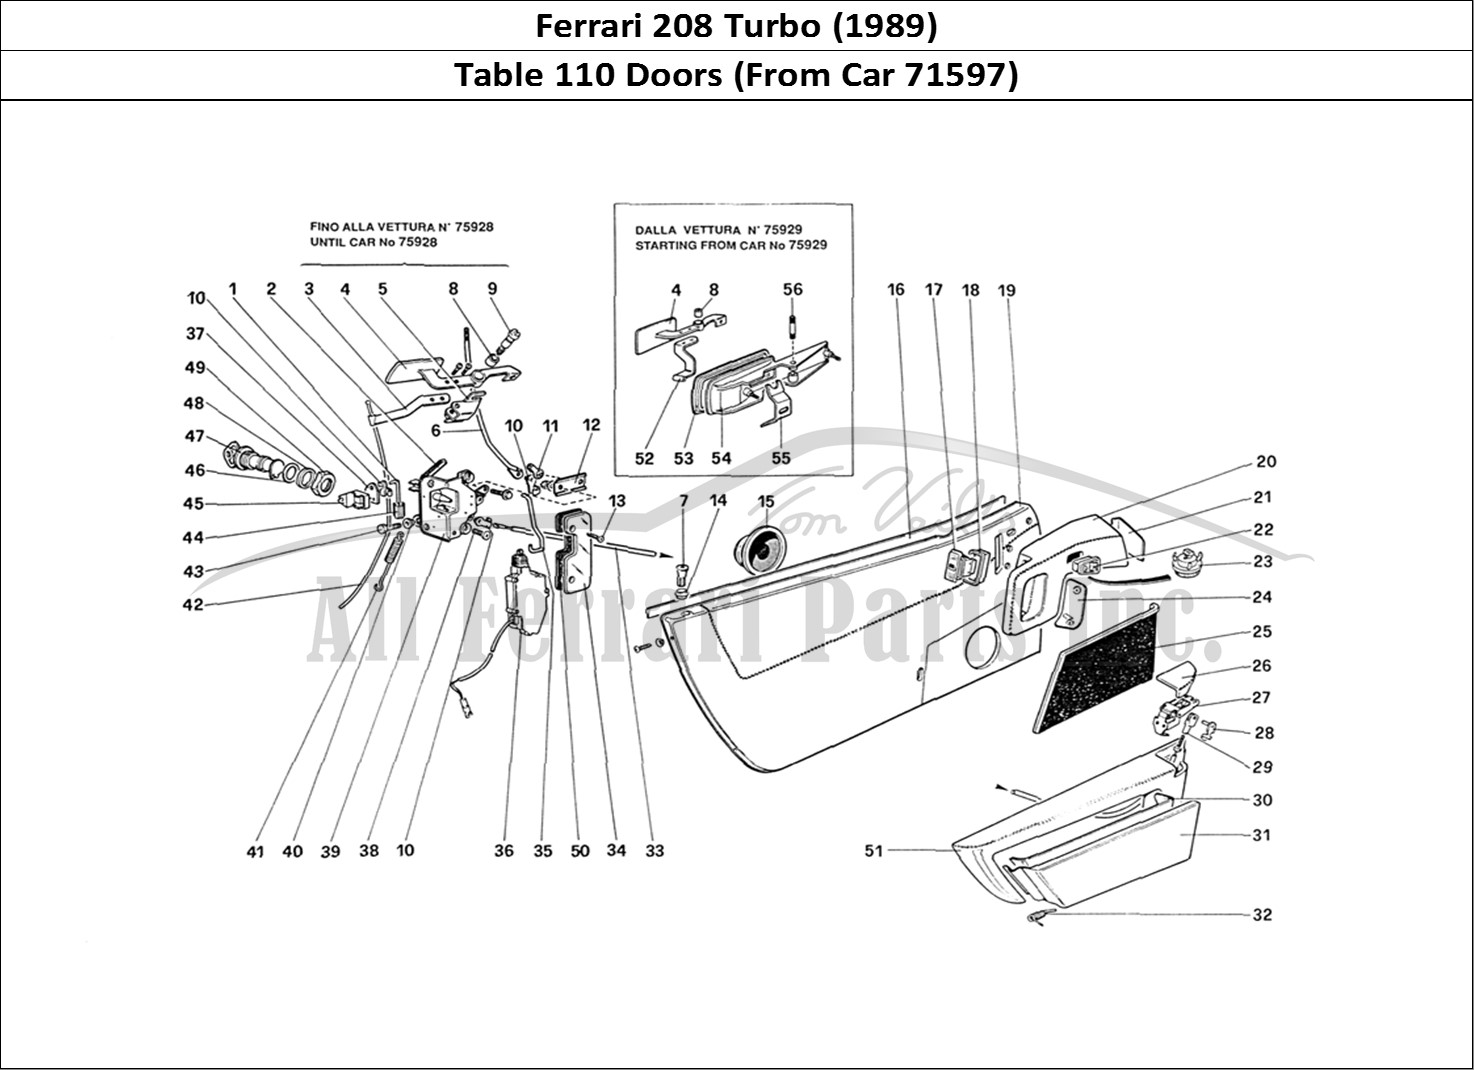 Ferrari Parts Ferrari 208 Turbo (1989) Page 110 Doors (From Car 71597)